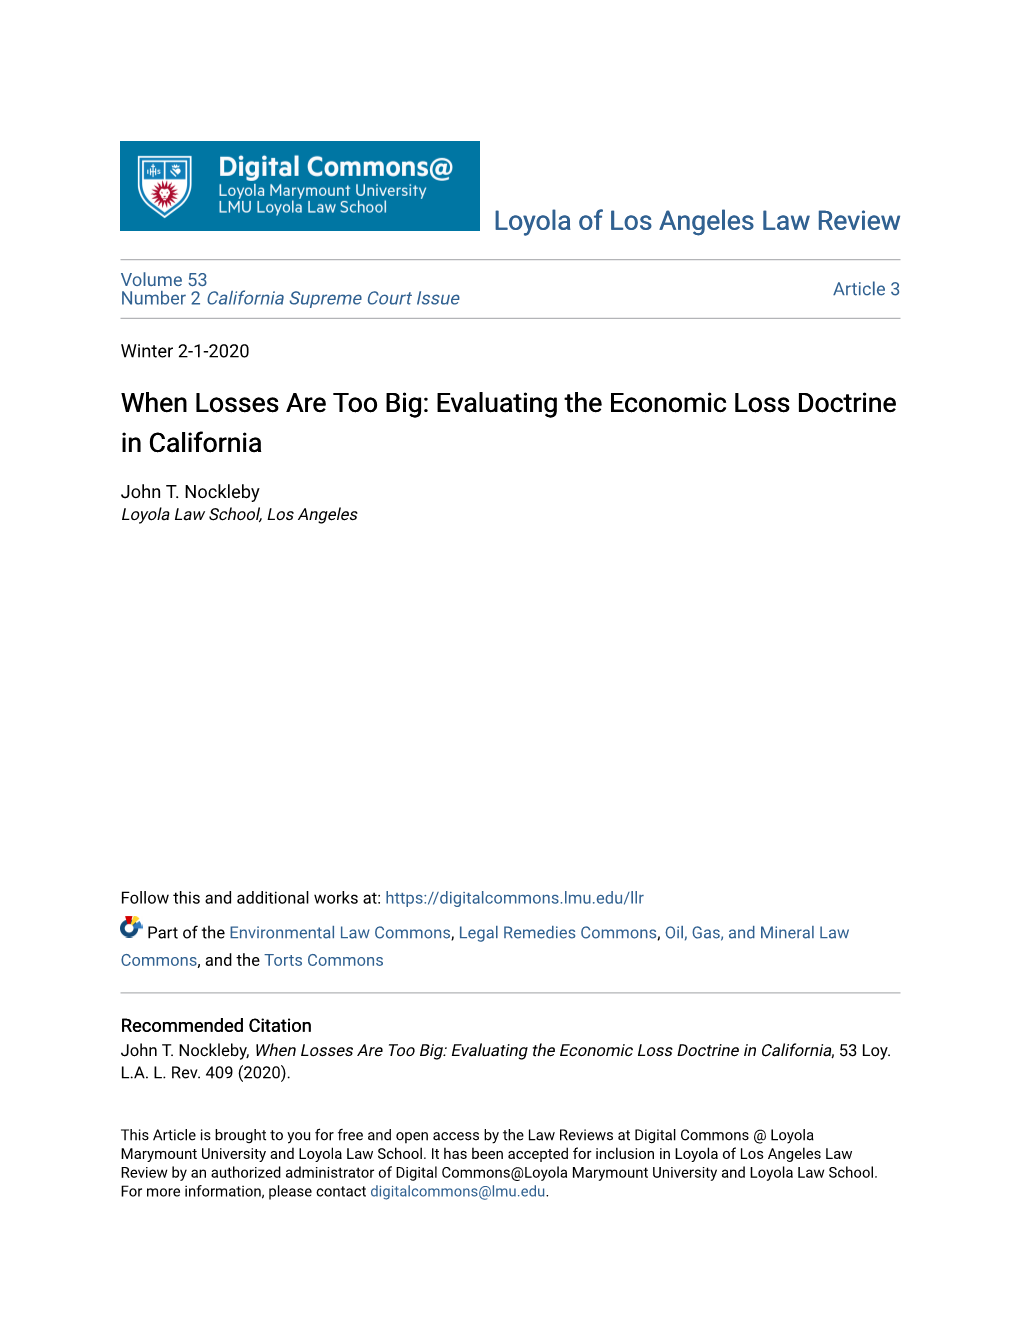 Evaluating the Economic Loss Doctrine in California